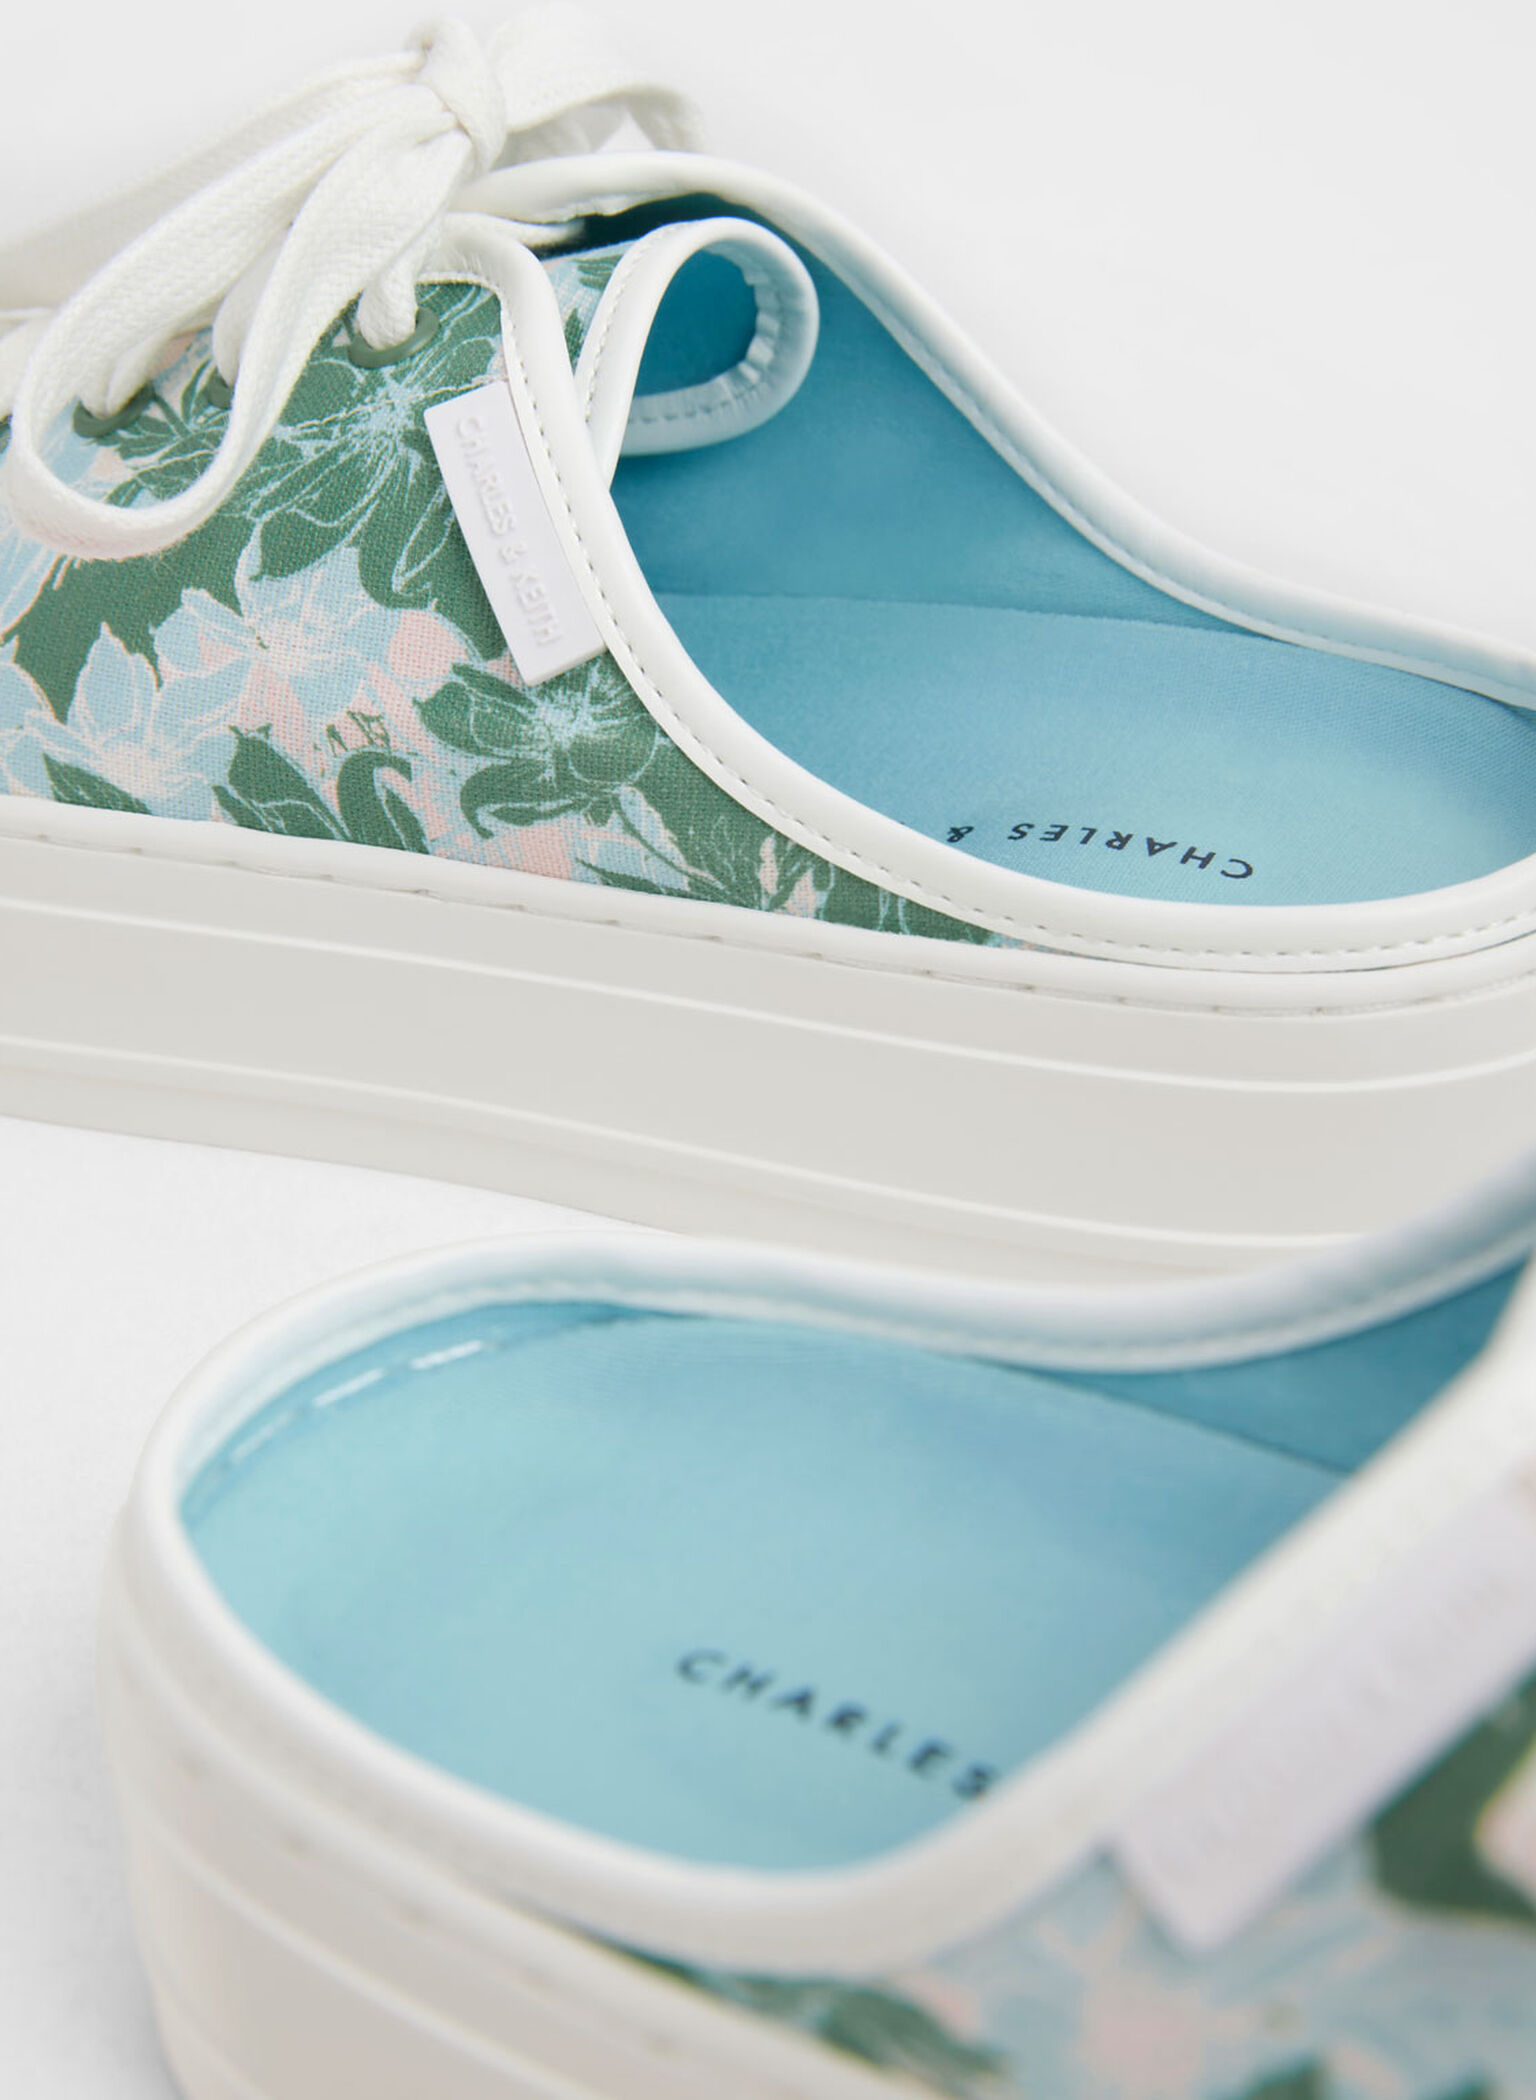 Linen Floral-Print Slip-On Sneakers, Multi, hi-res